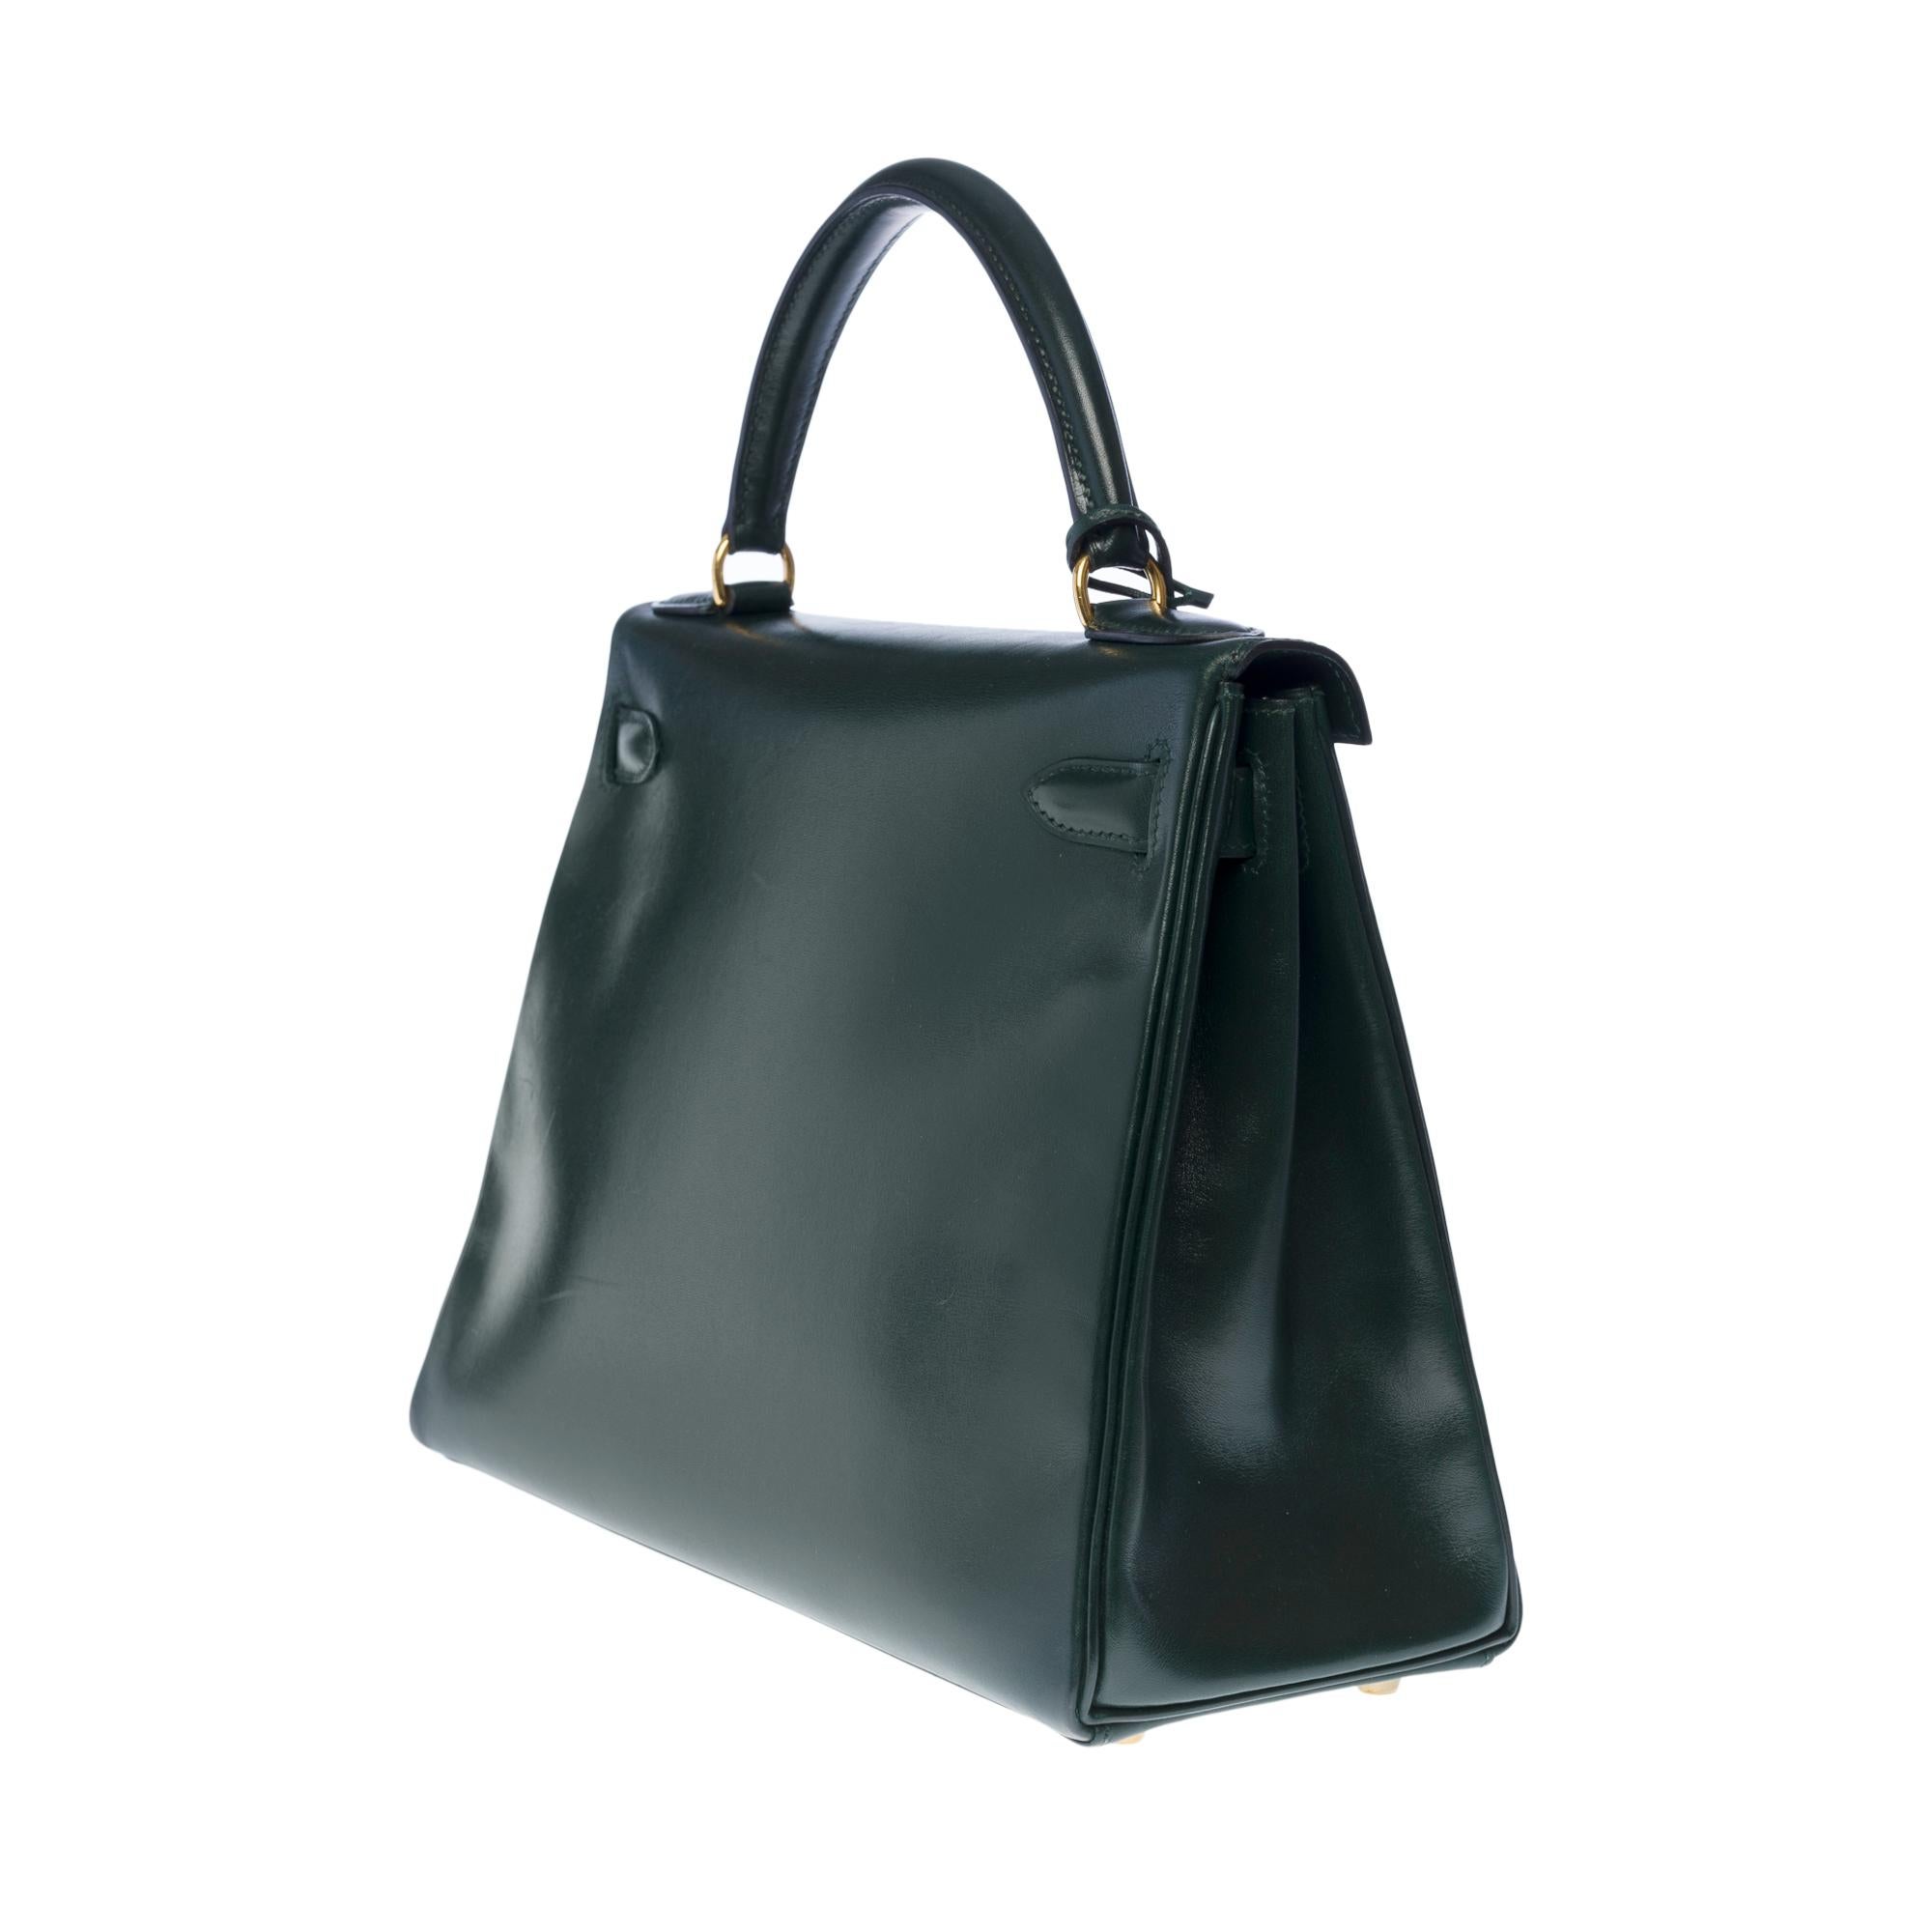 Women's or Men's Rare Hermès Kelly 28 retourne handbag strap in green box calf leather, GHW